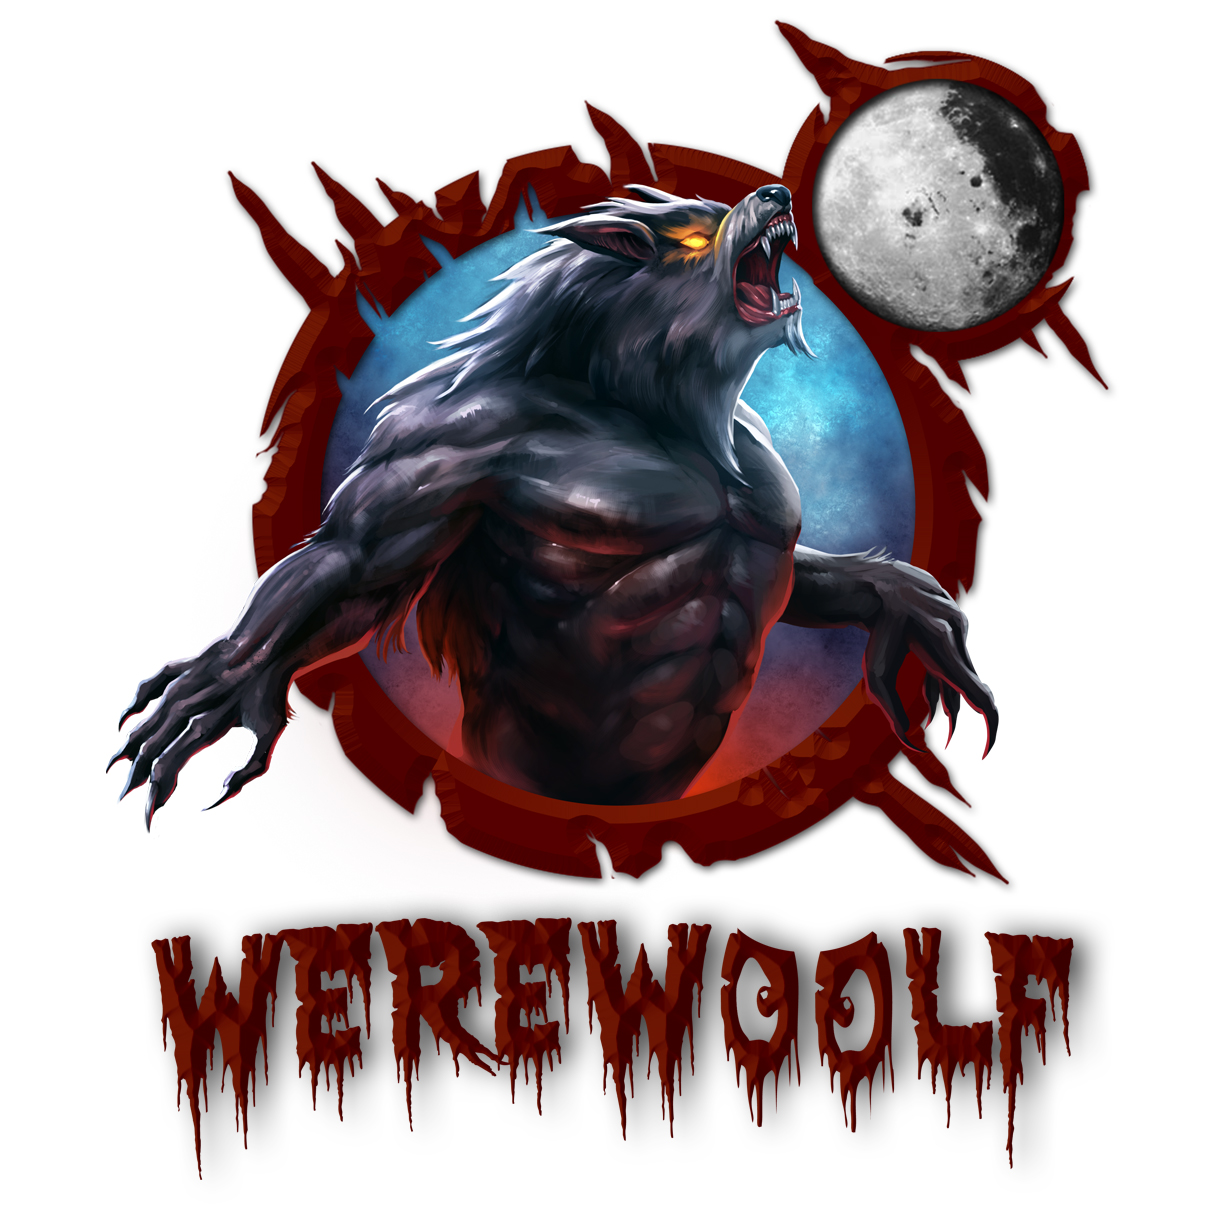 Werewoolf Miniatures: Beast of Nergal and eBay update